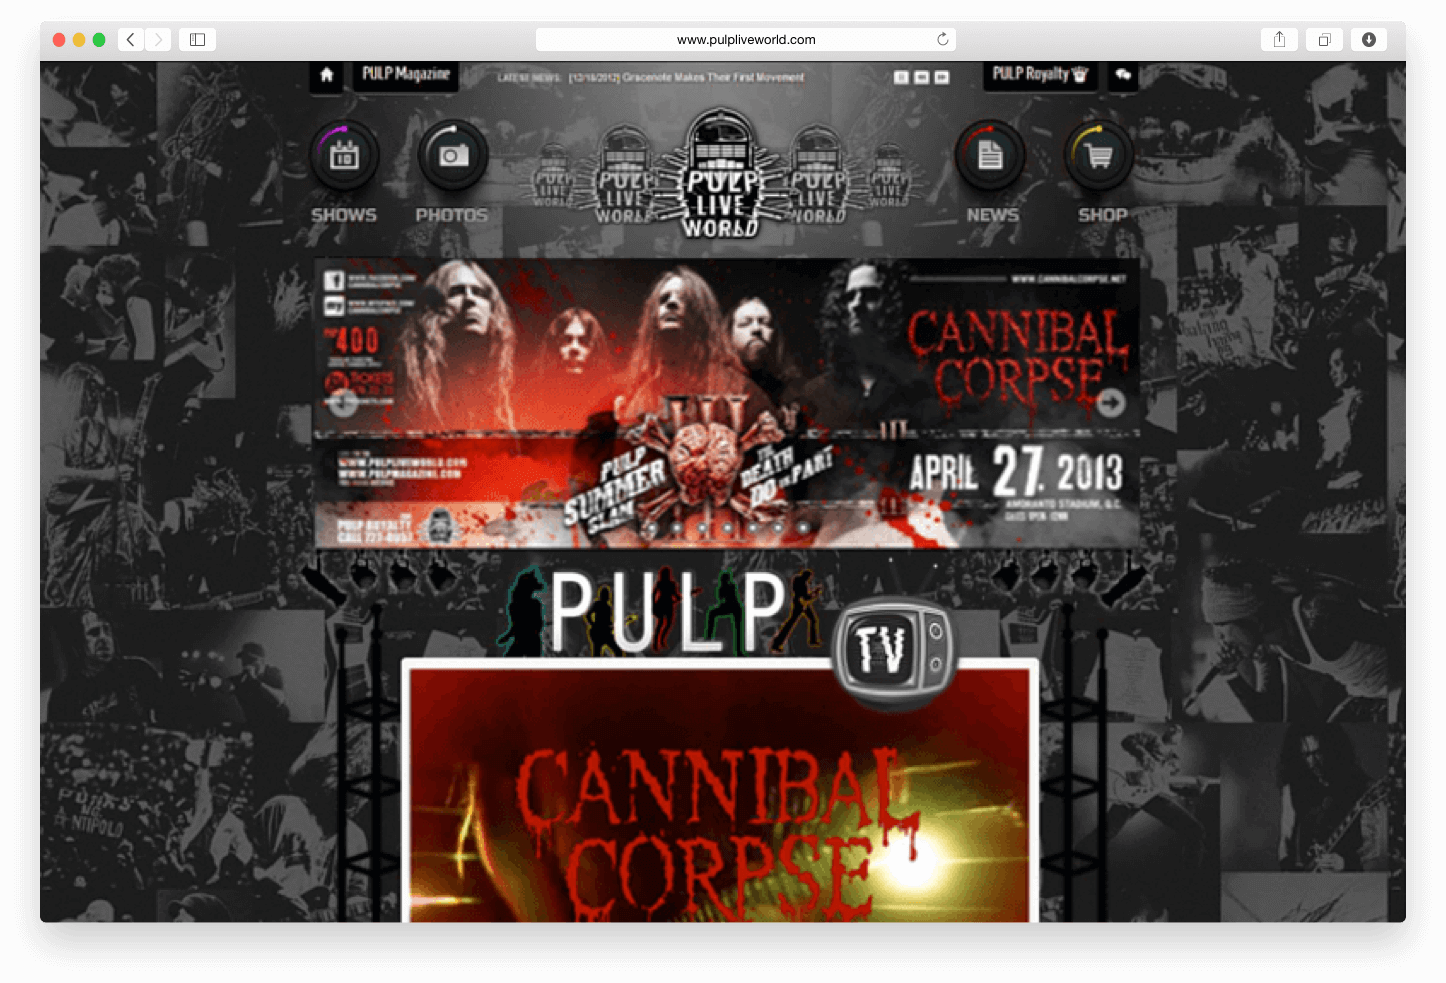 PULP Live World Website